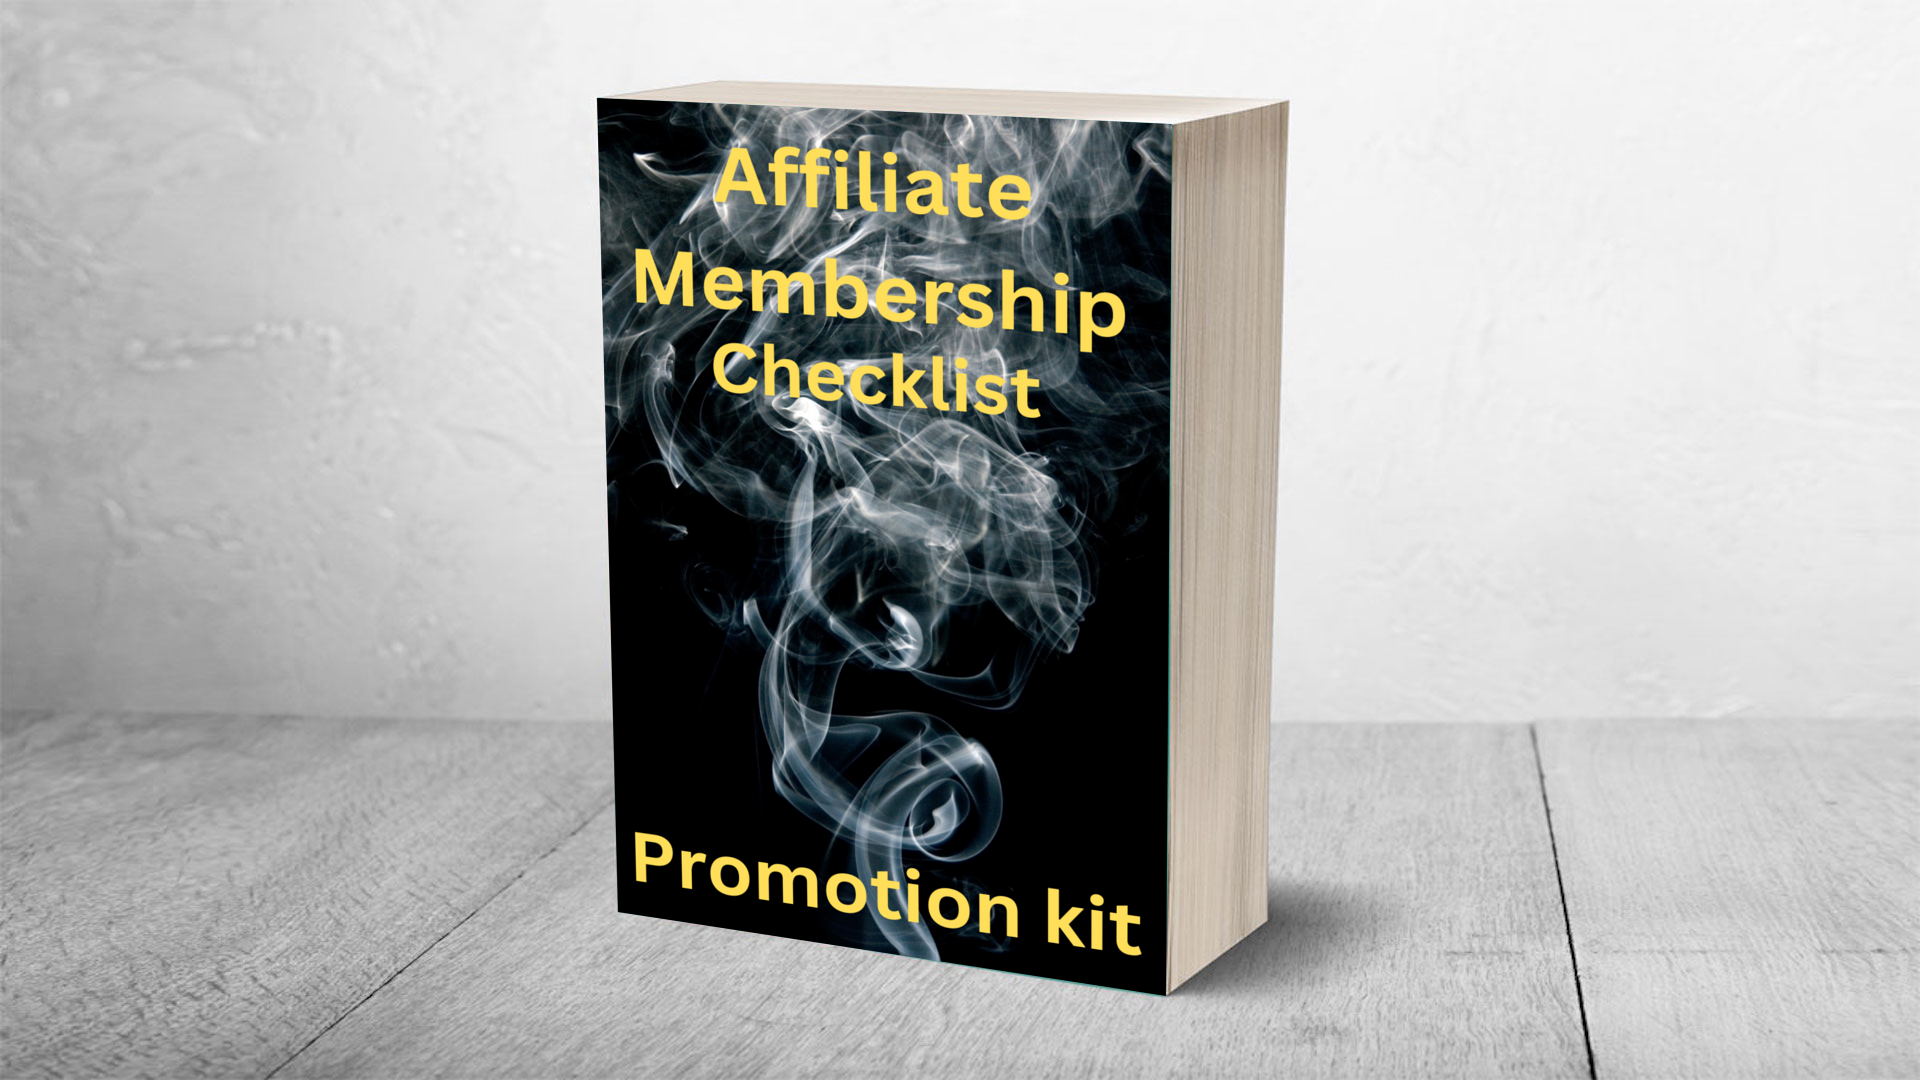 My Cheetah website | affiliate Sales monthly membership checklist